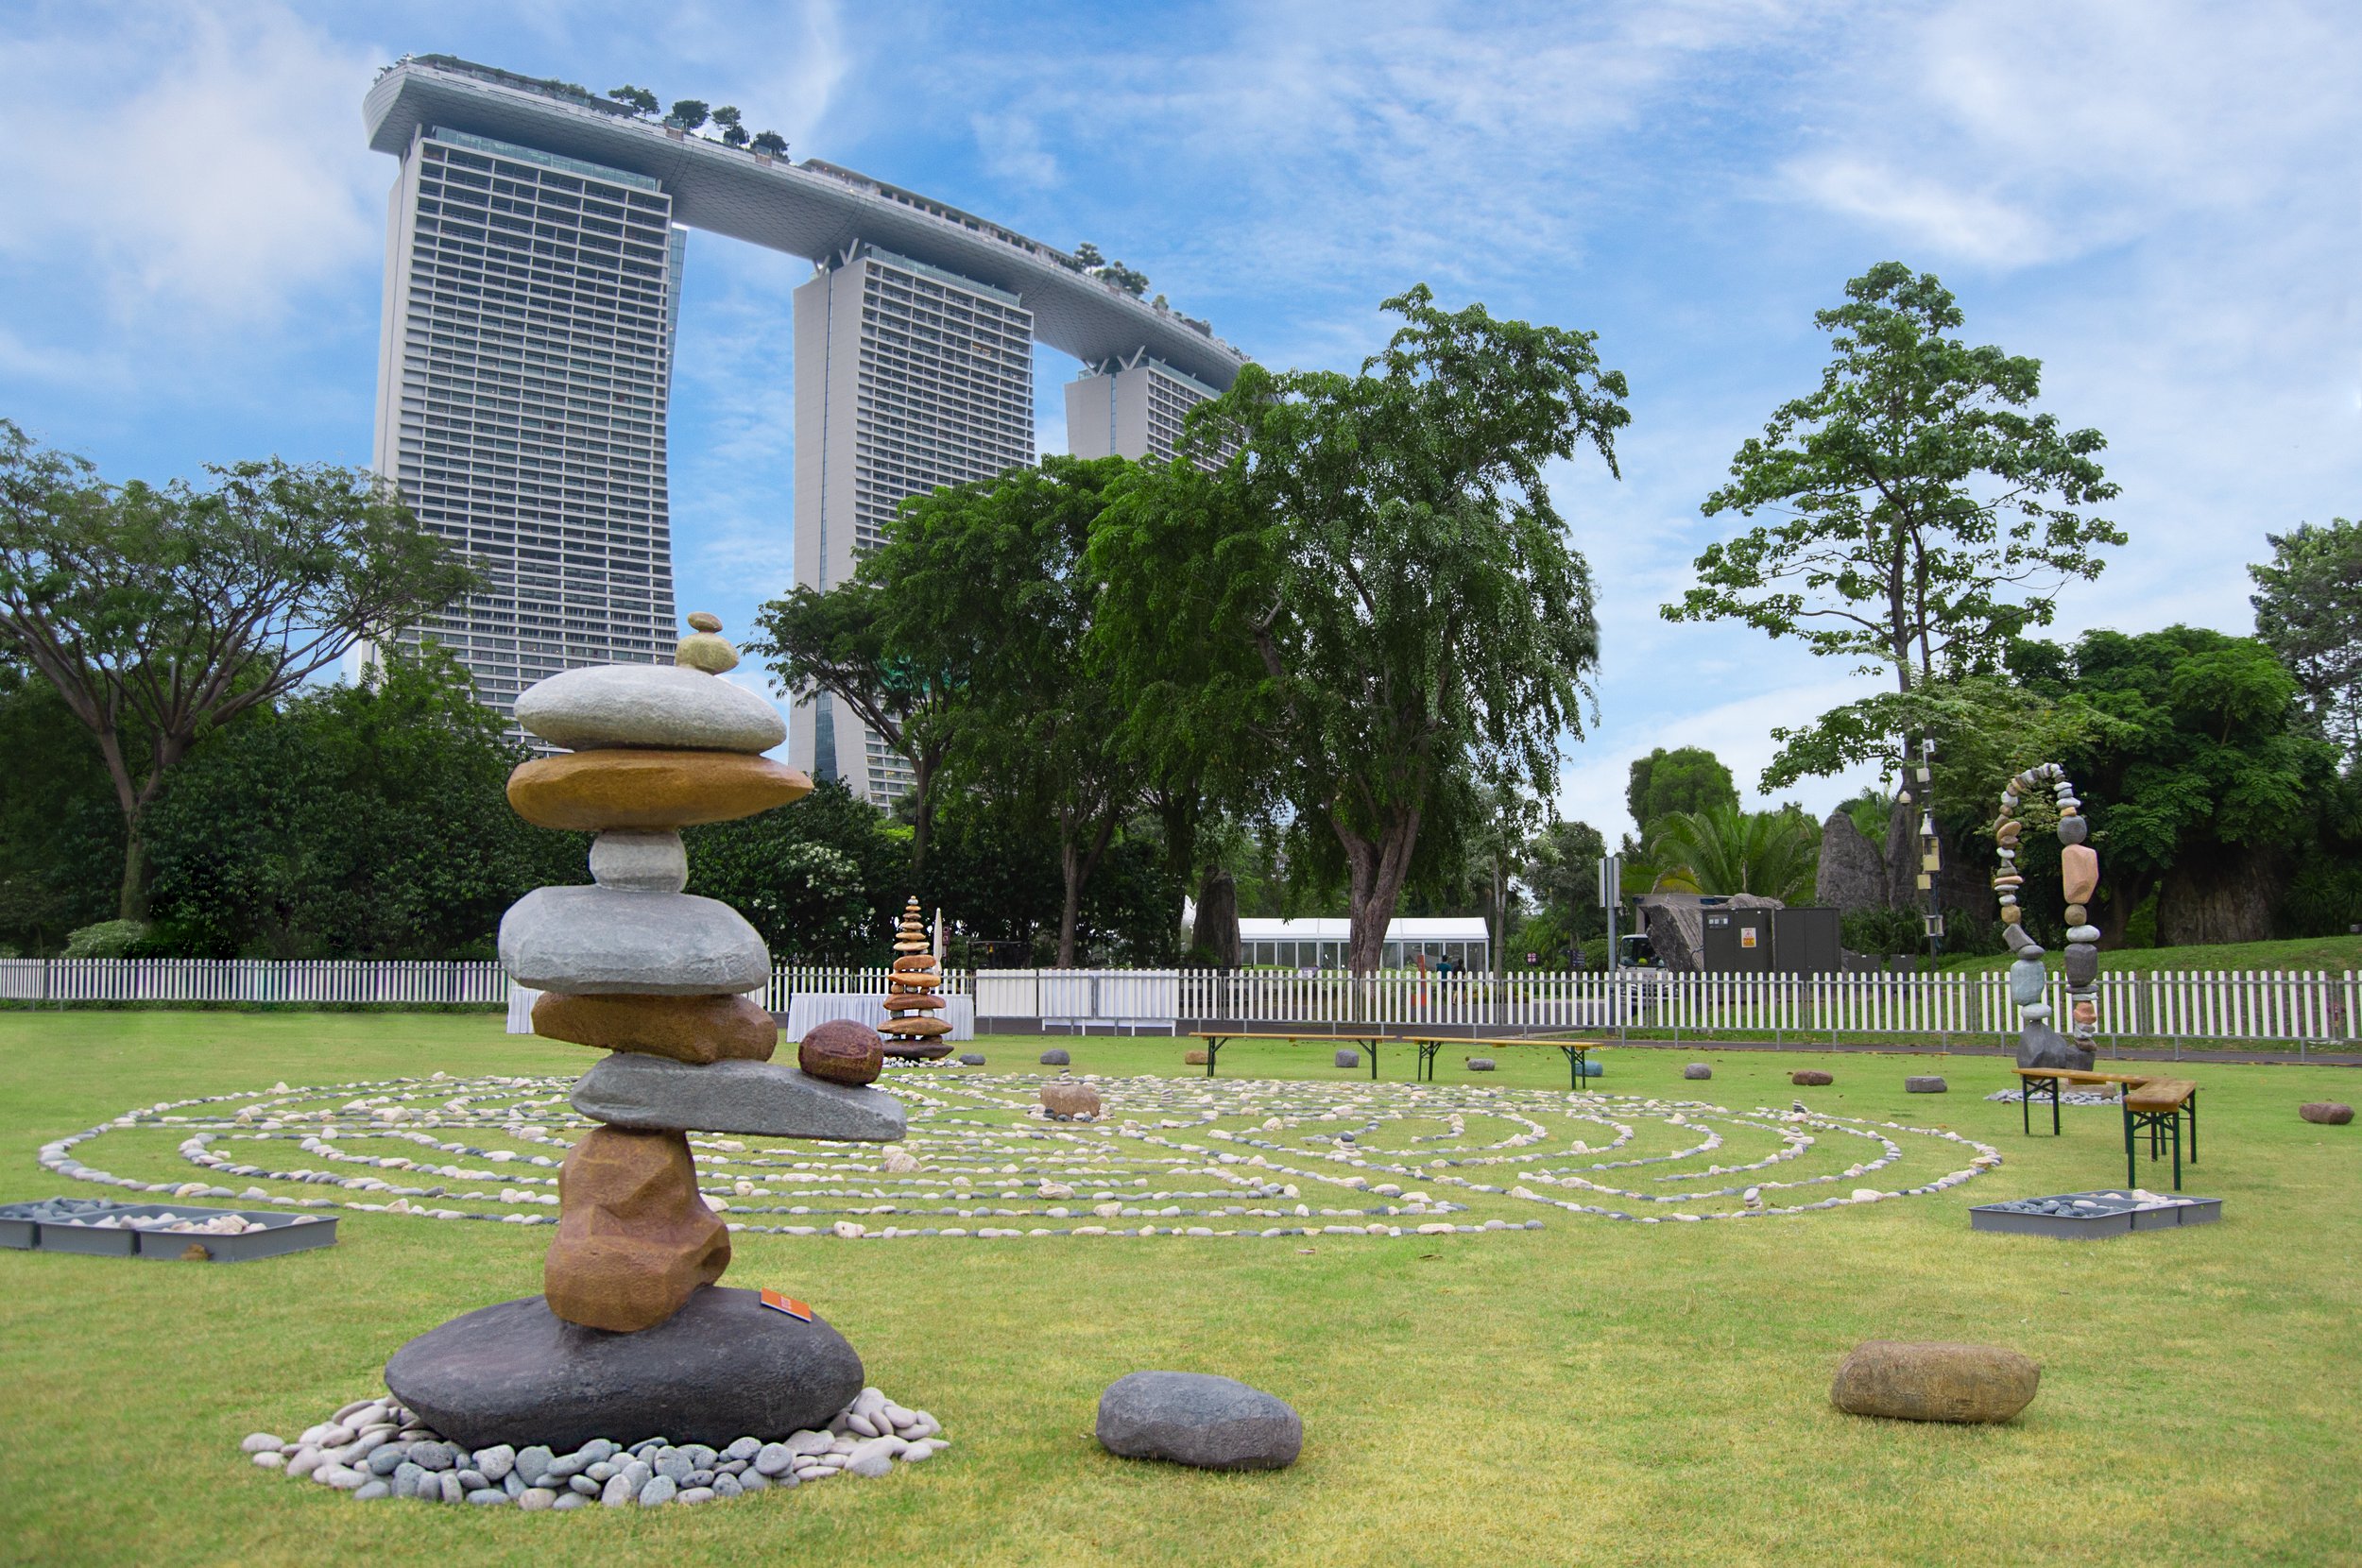 dezign-format-themed-experience-wellness-festival-singapore-2022-8.jpg